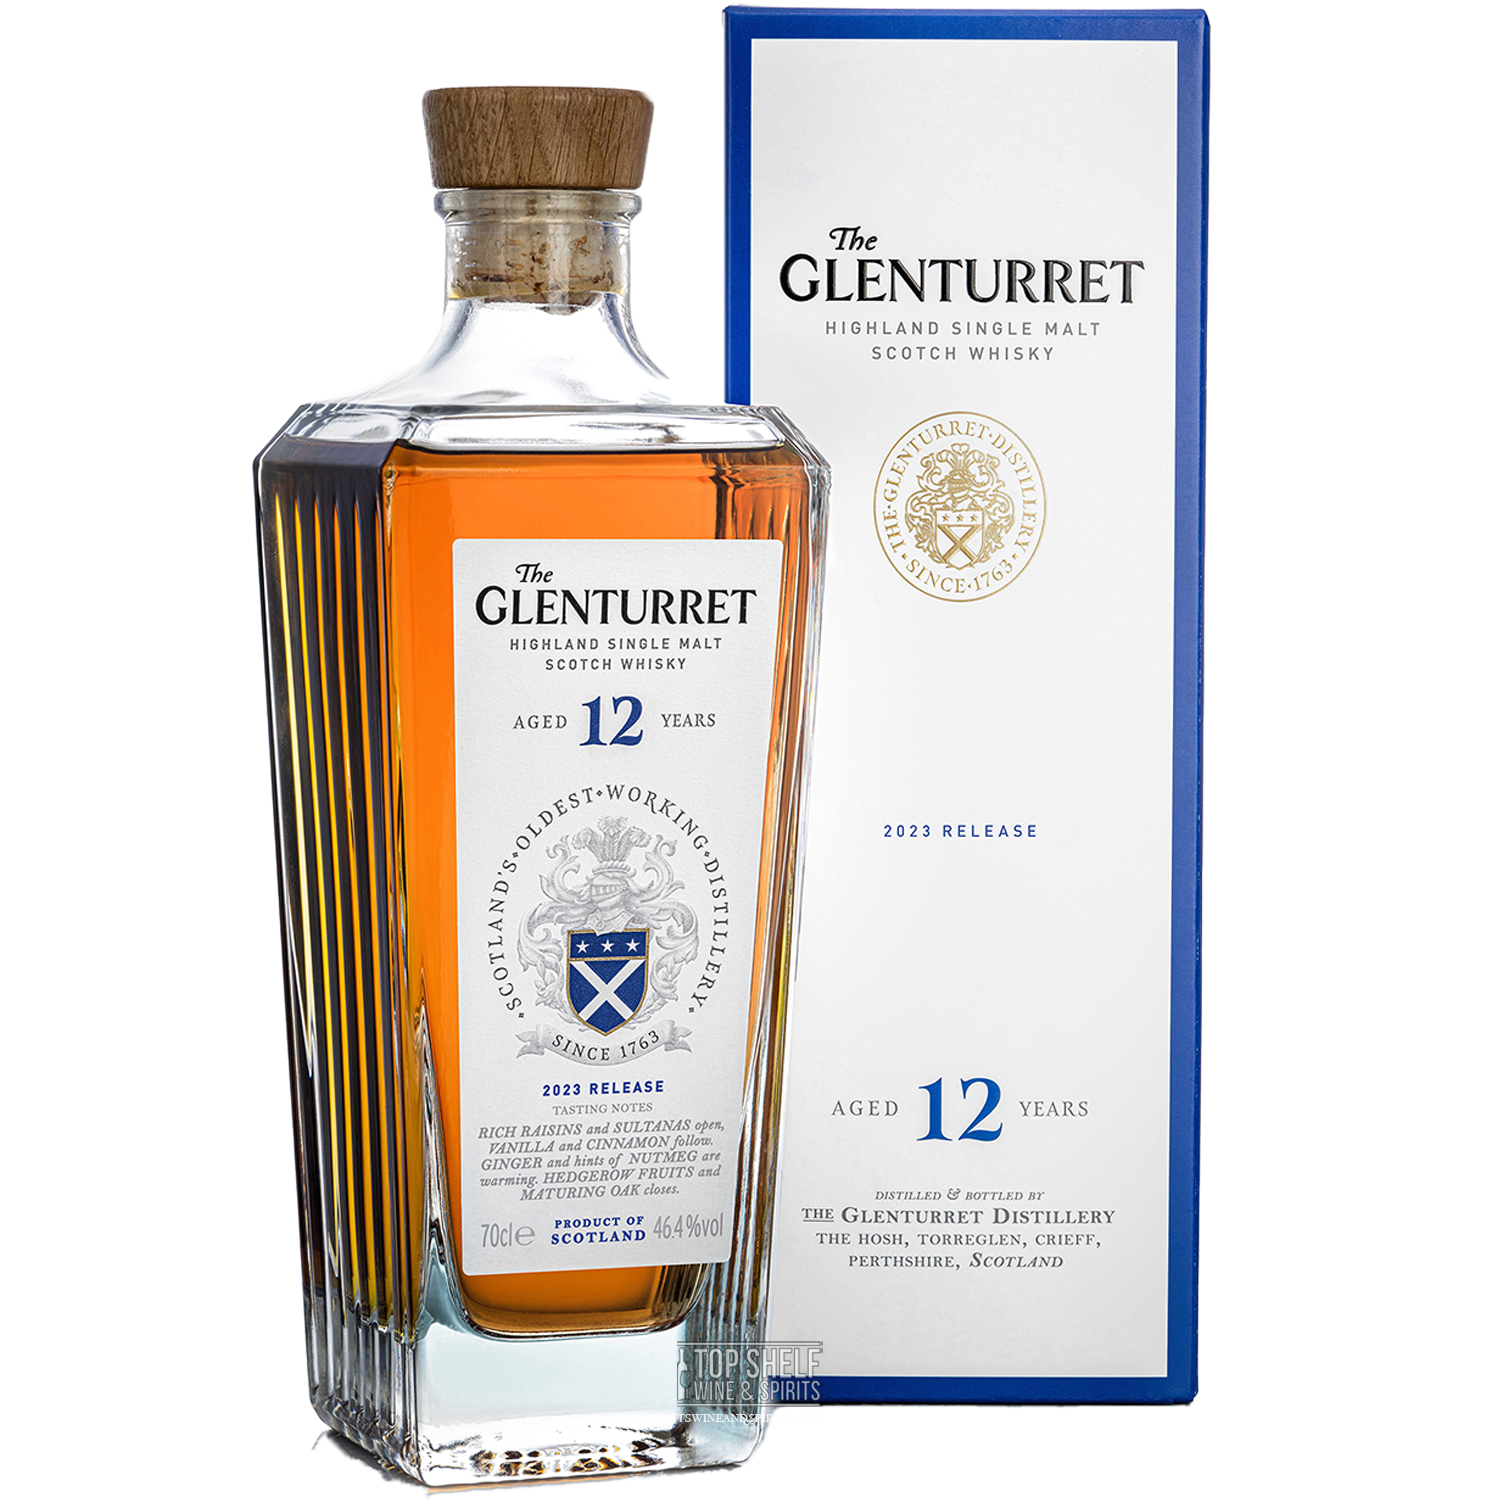 The Glenturret Highland 12 Year Single Malt Scotch Whisky